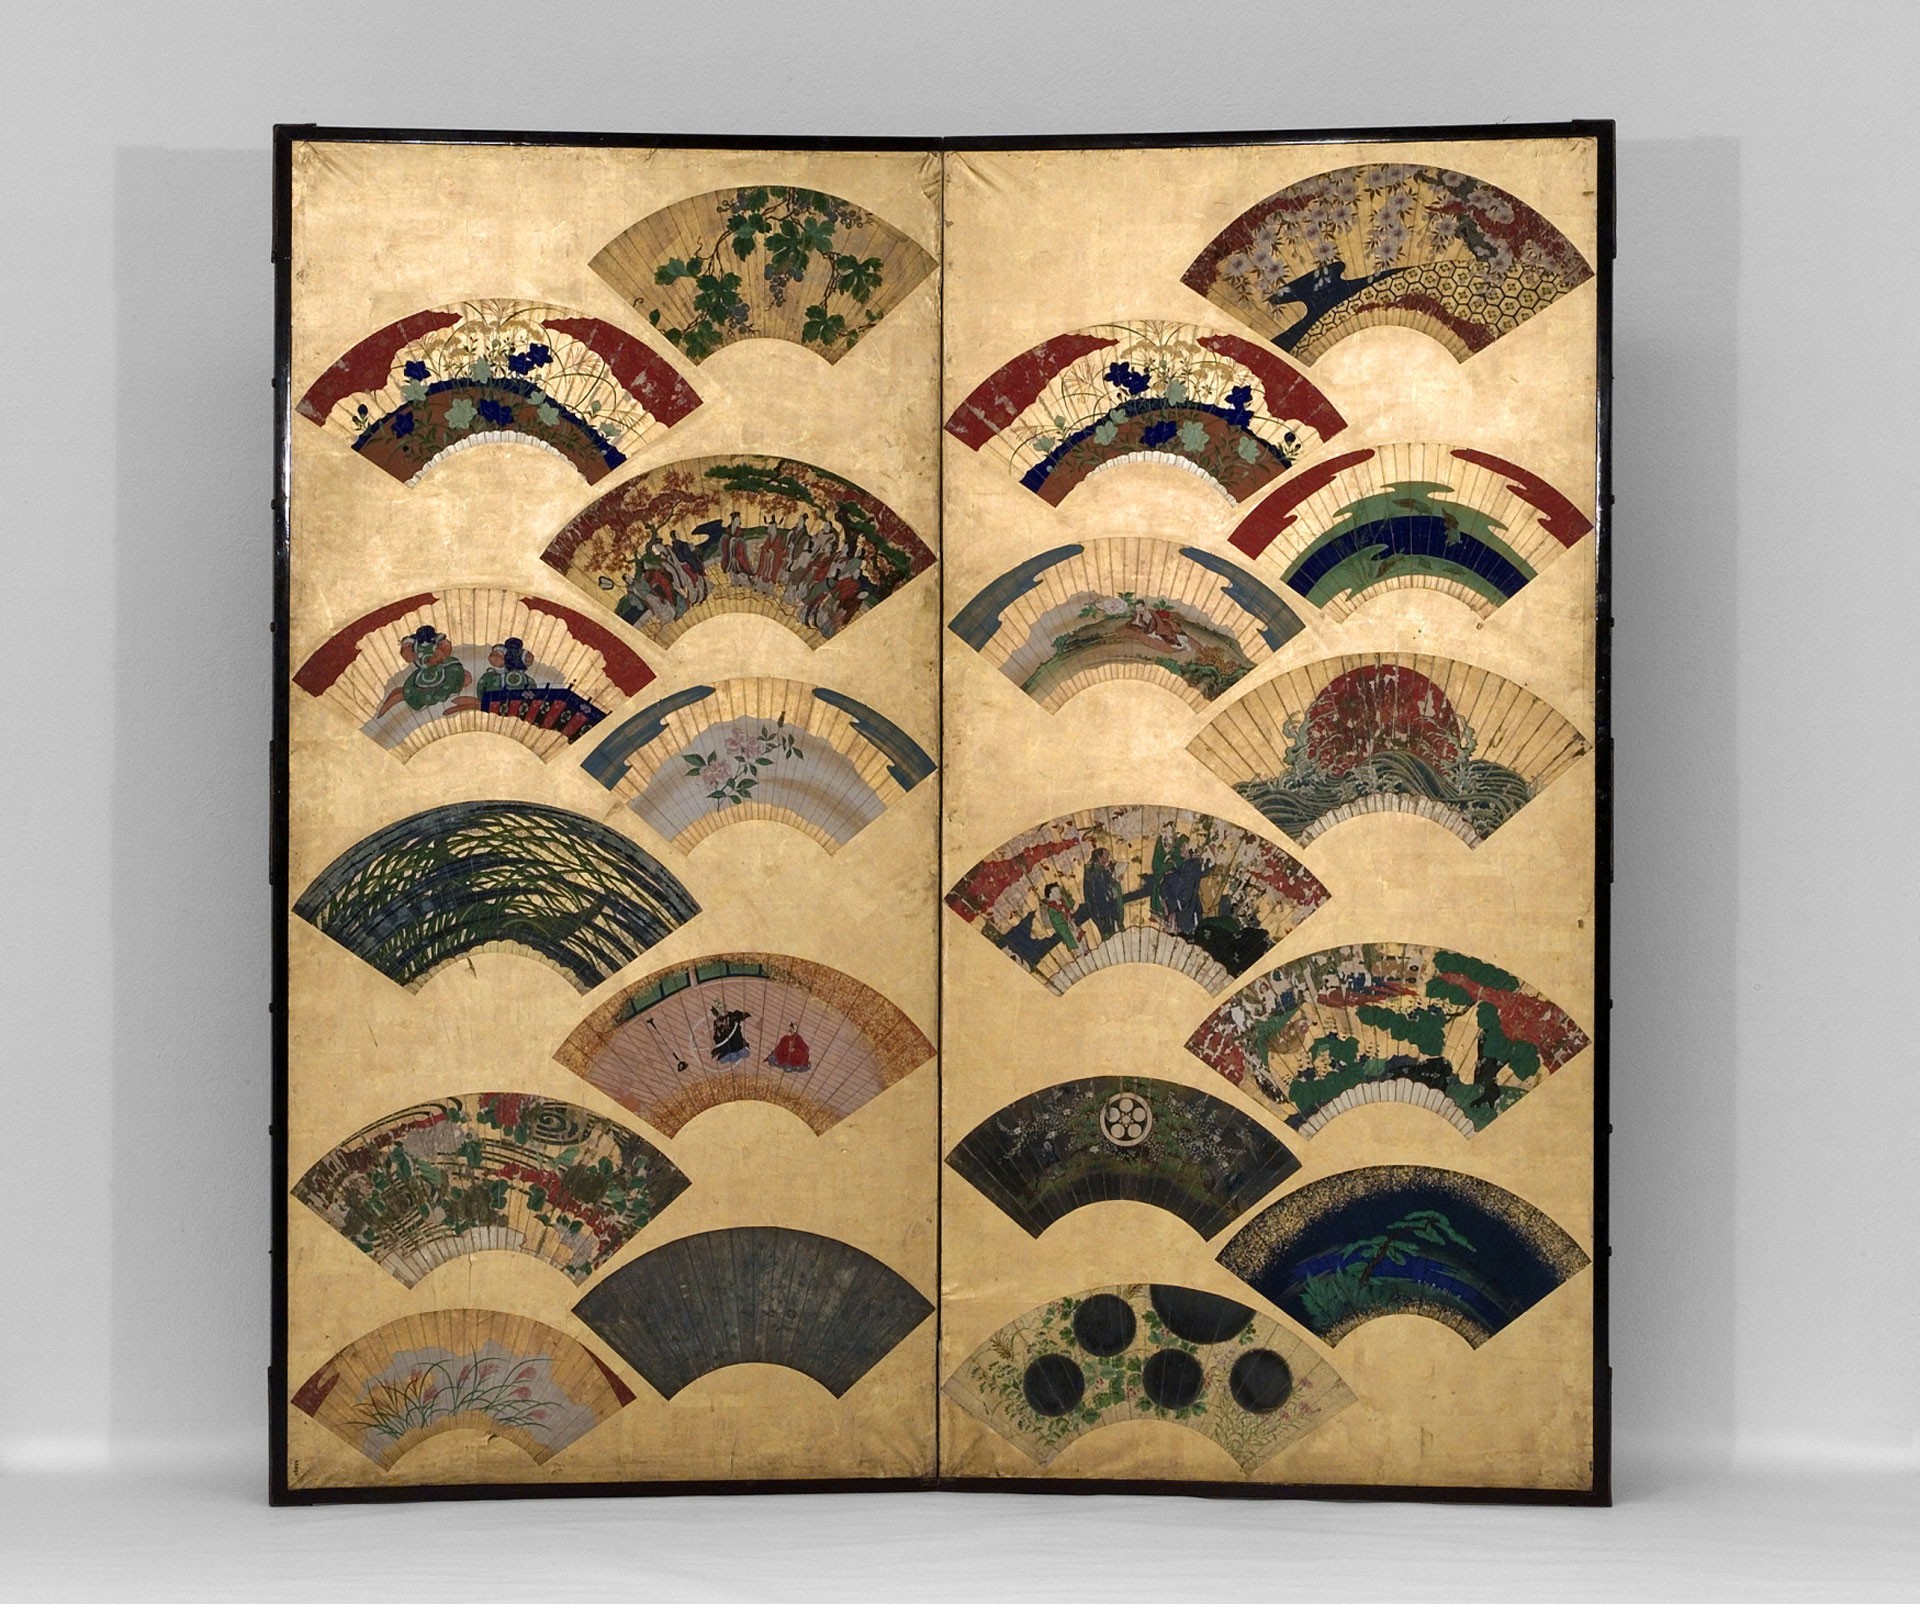 <BODY>Two-panel folding screen (byōbu), Japan, 18 c. MAK, OR 3884 © MAK</BODY>